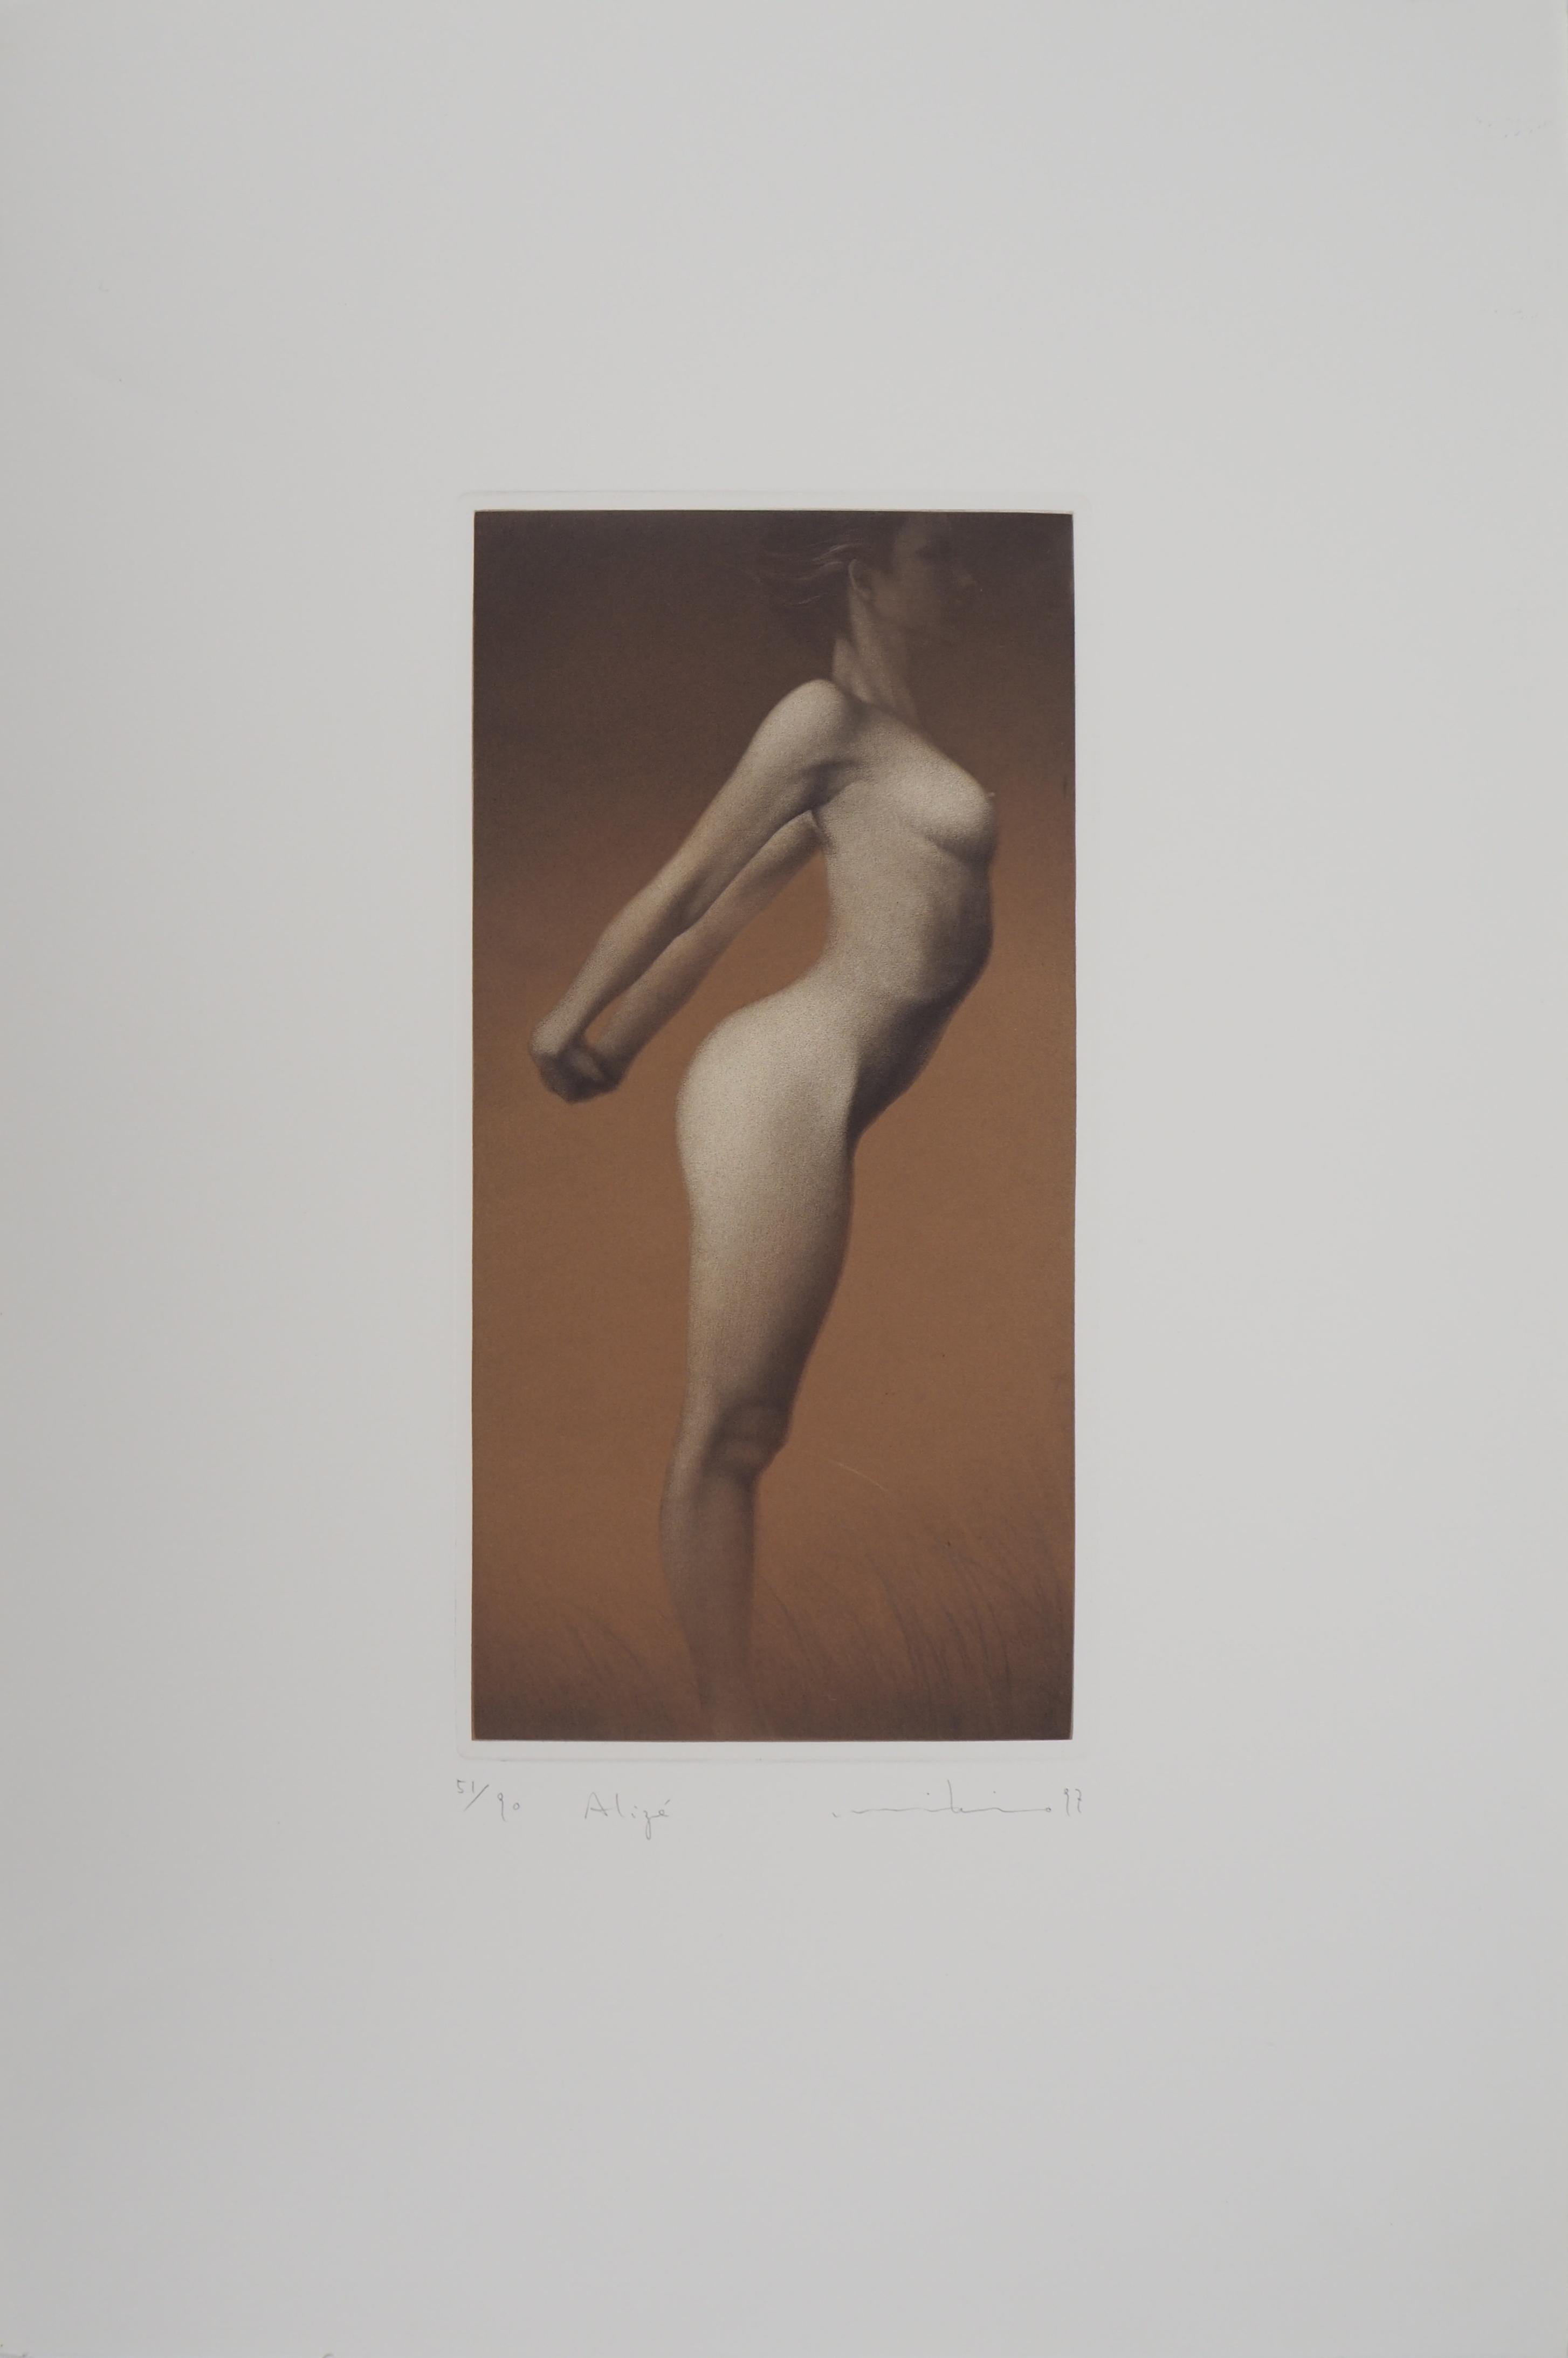 Mikio Watanabe Nude Print - Female nude - Original handsigned etching / 90ex